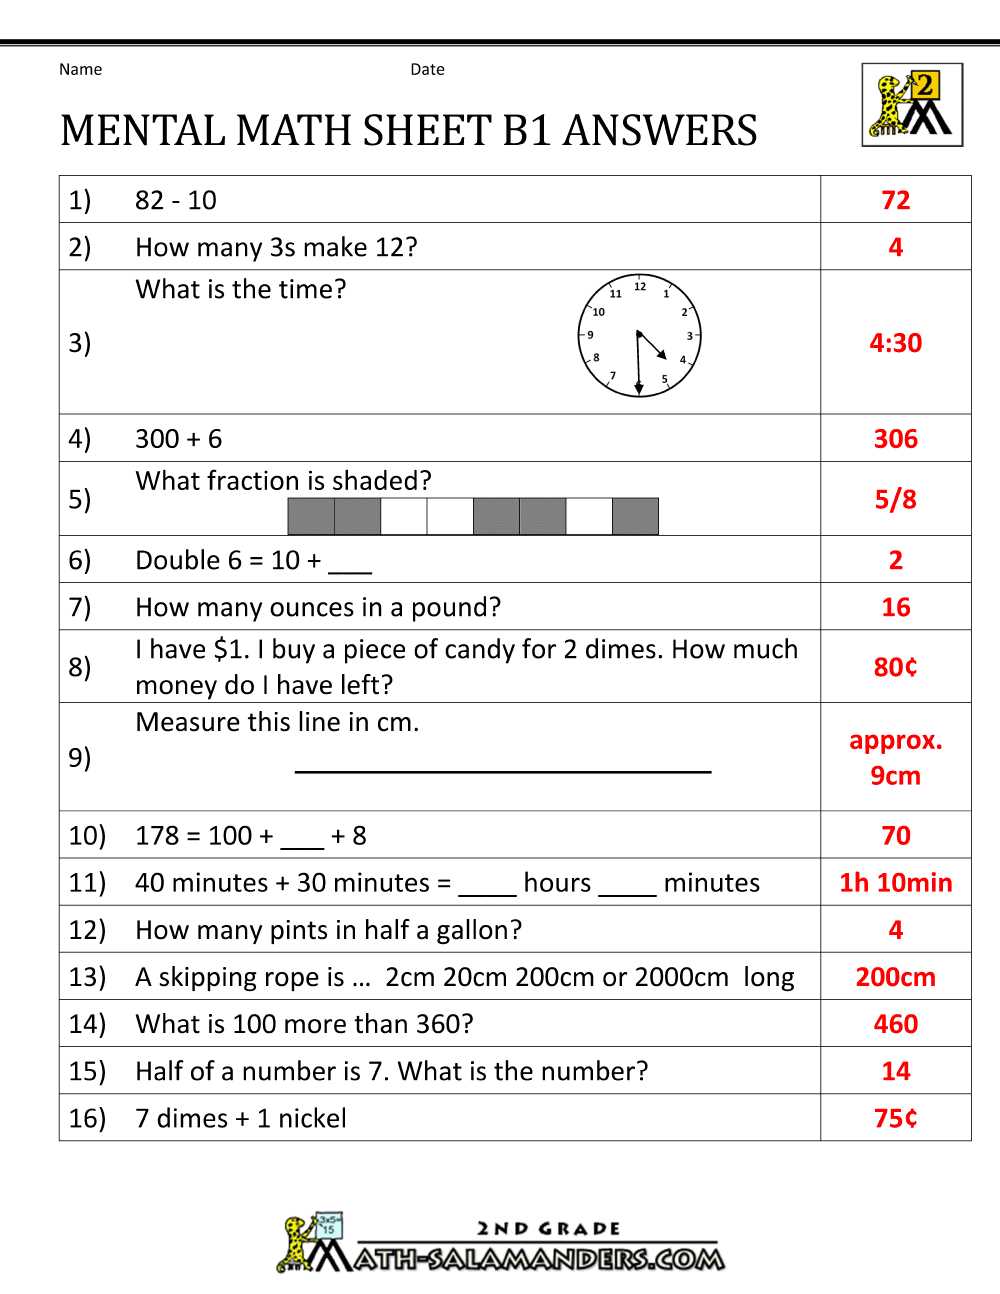 Saxon math 7th grade answers